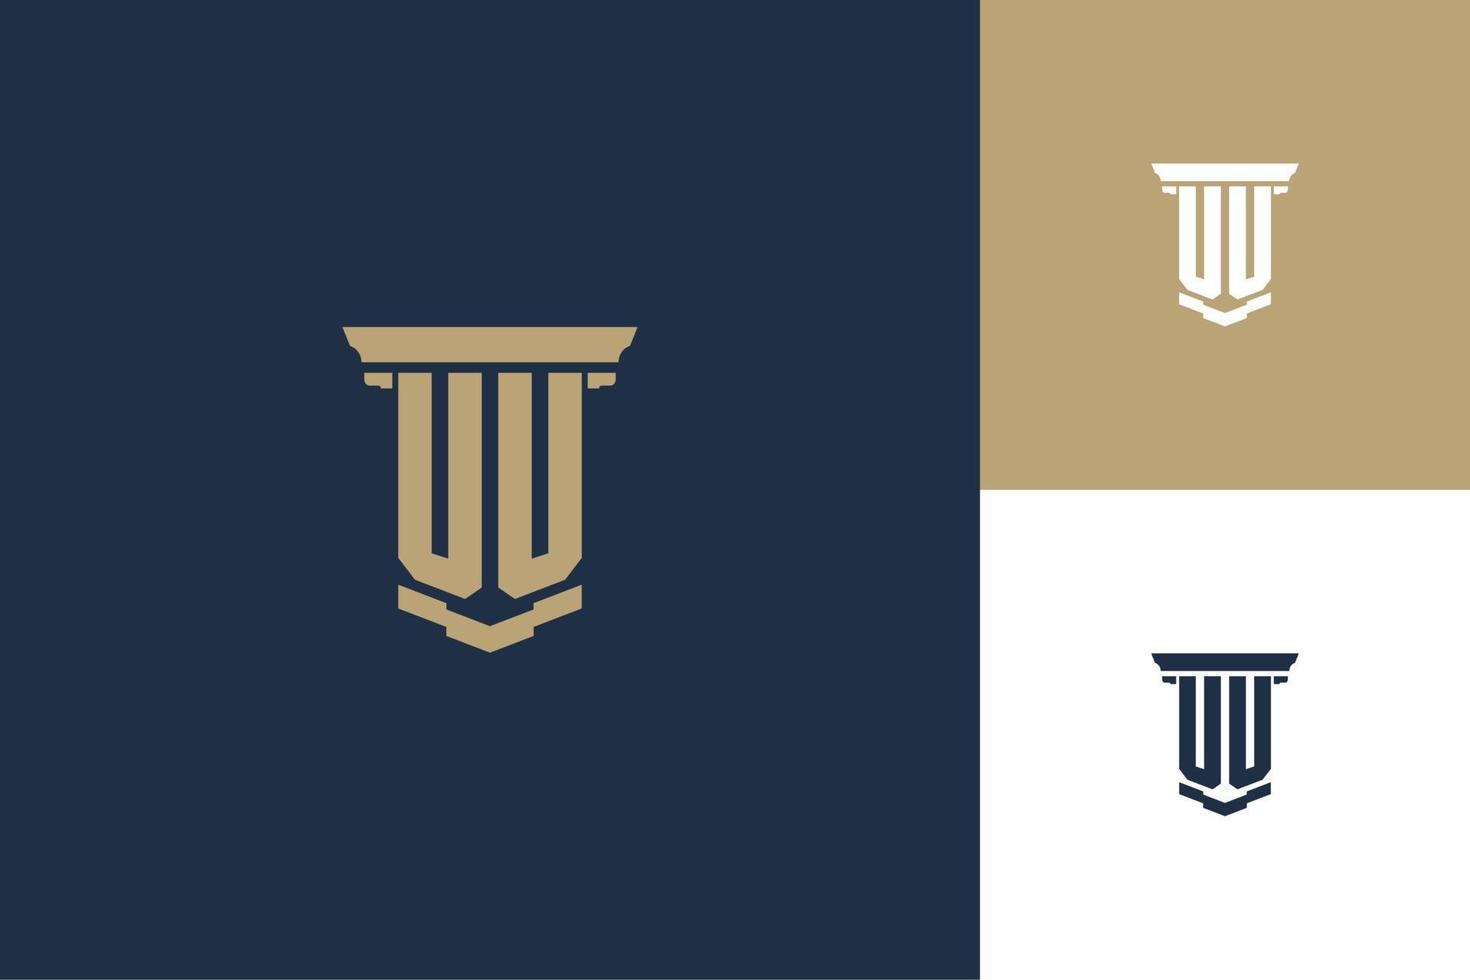 UU monogram initials logo design with pillar icon. Attorney law logo design vector